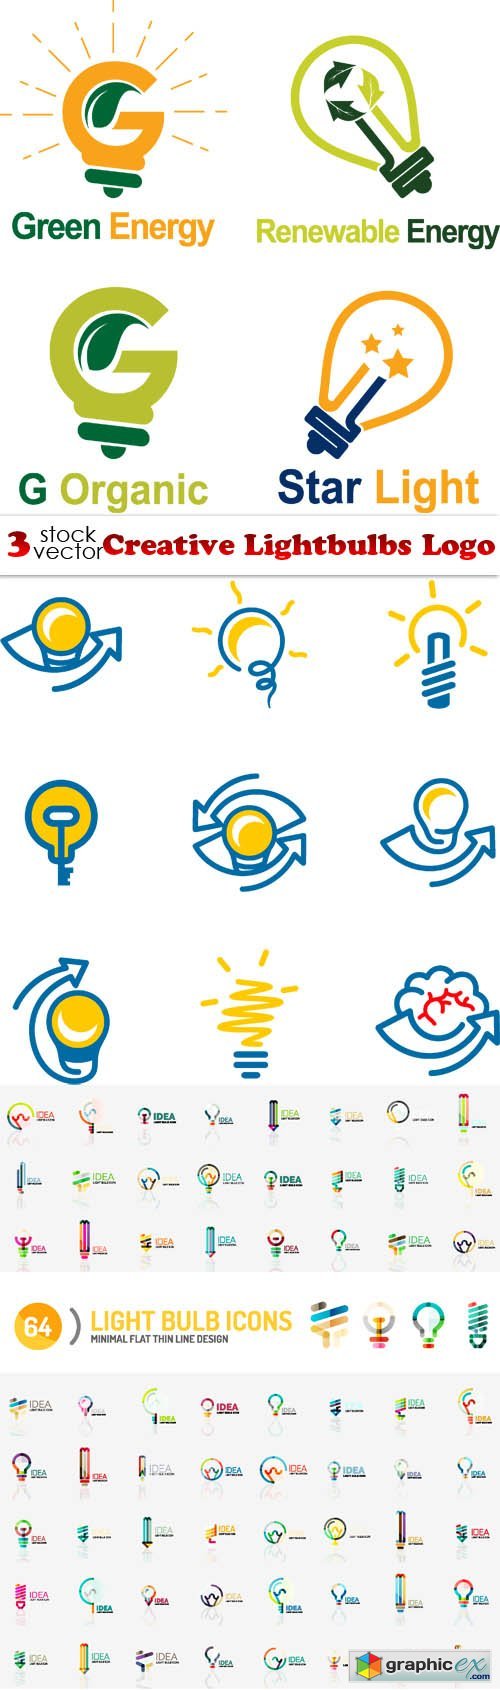 Creative Lightbulbs Logo